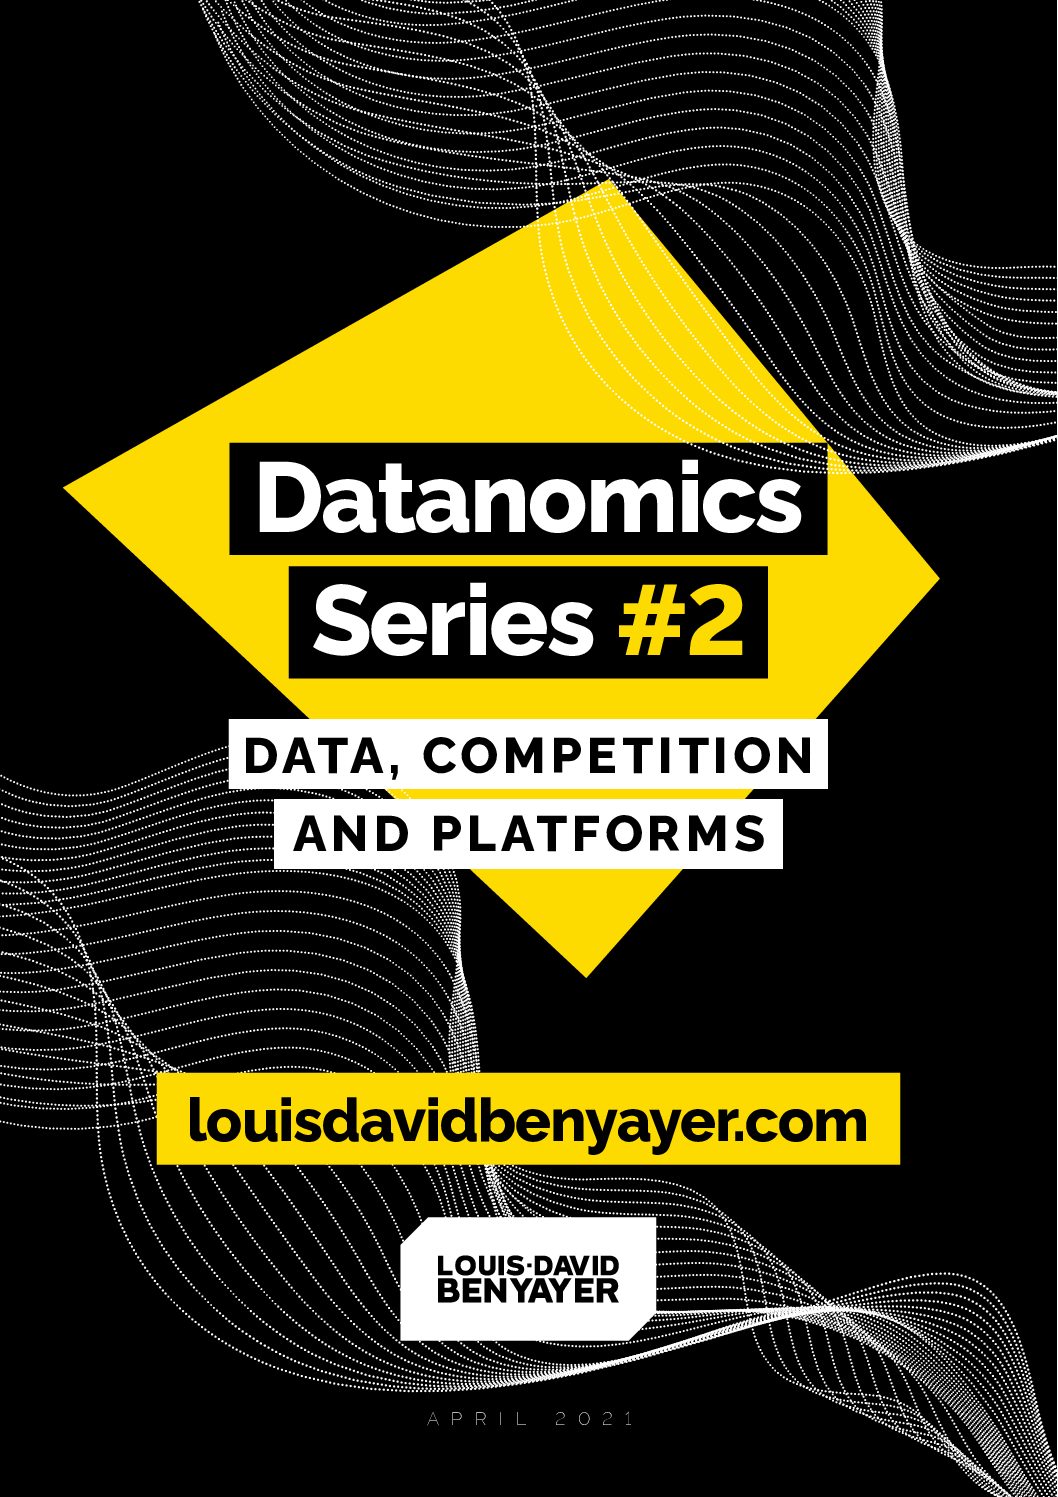 https://www.louisdavidbenyayer.com/wp-content/uploads/2021/05/Datanomics-Series-2_Data-platforms-and-competitionpdf-pdf.jpg